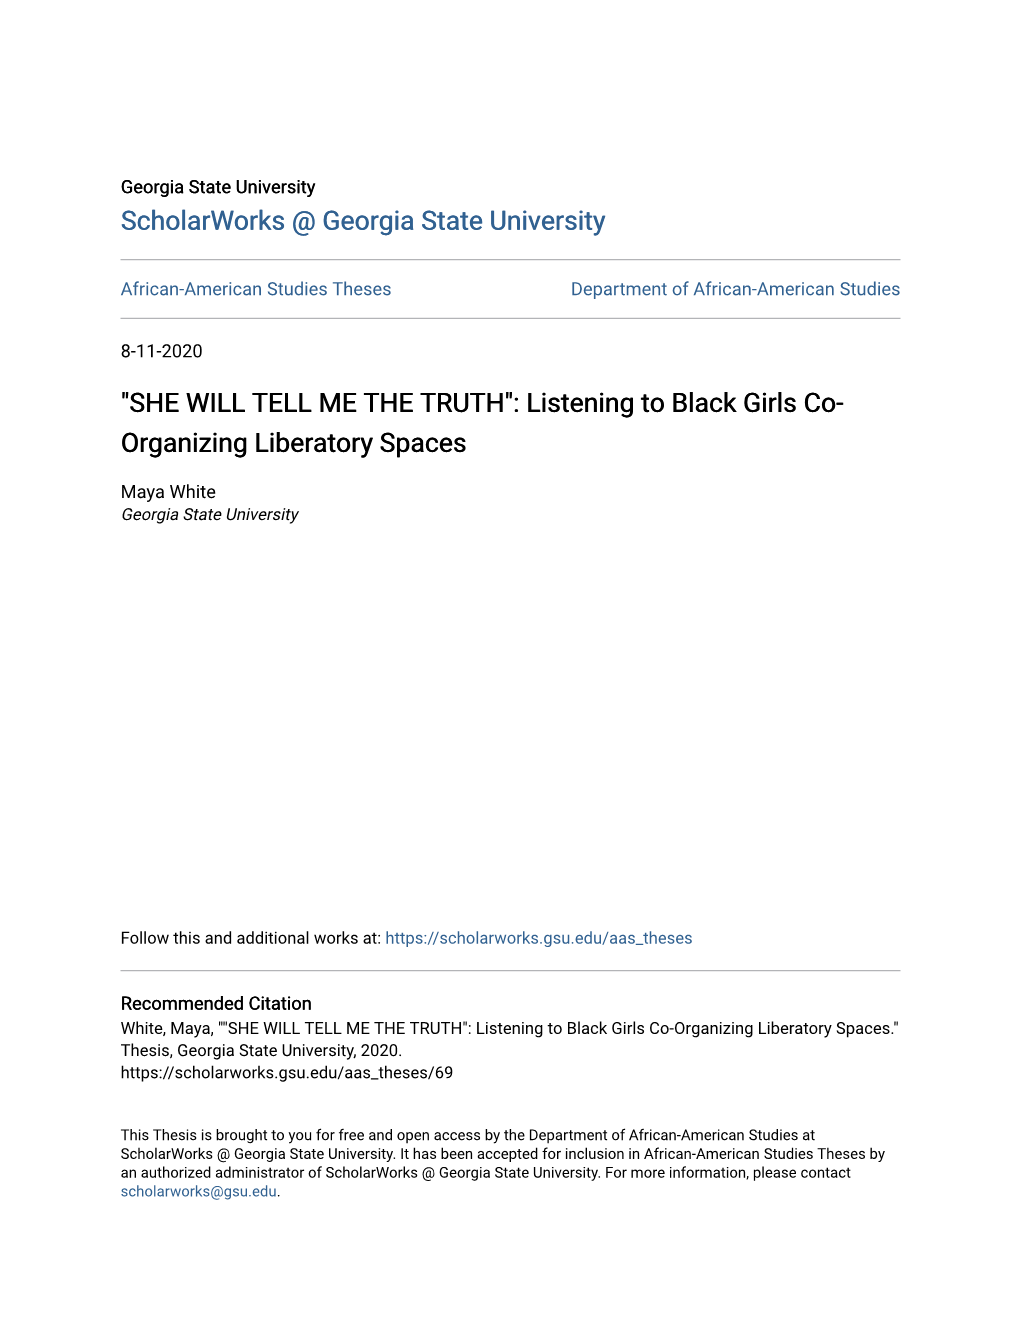 Listening to Black Girls Co-Organizing Liberatory Spaces." Thesis, Georgia State University, 2020